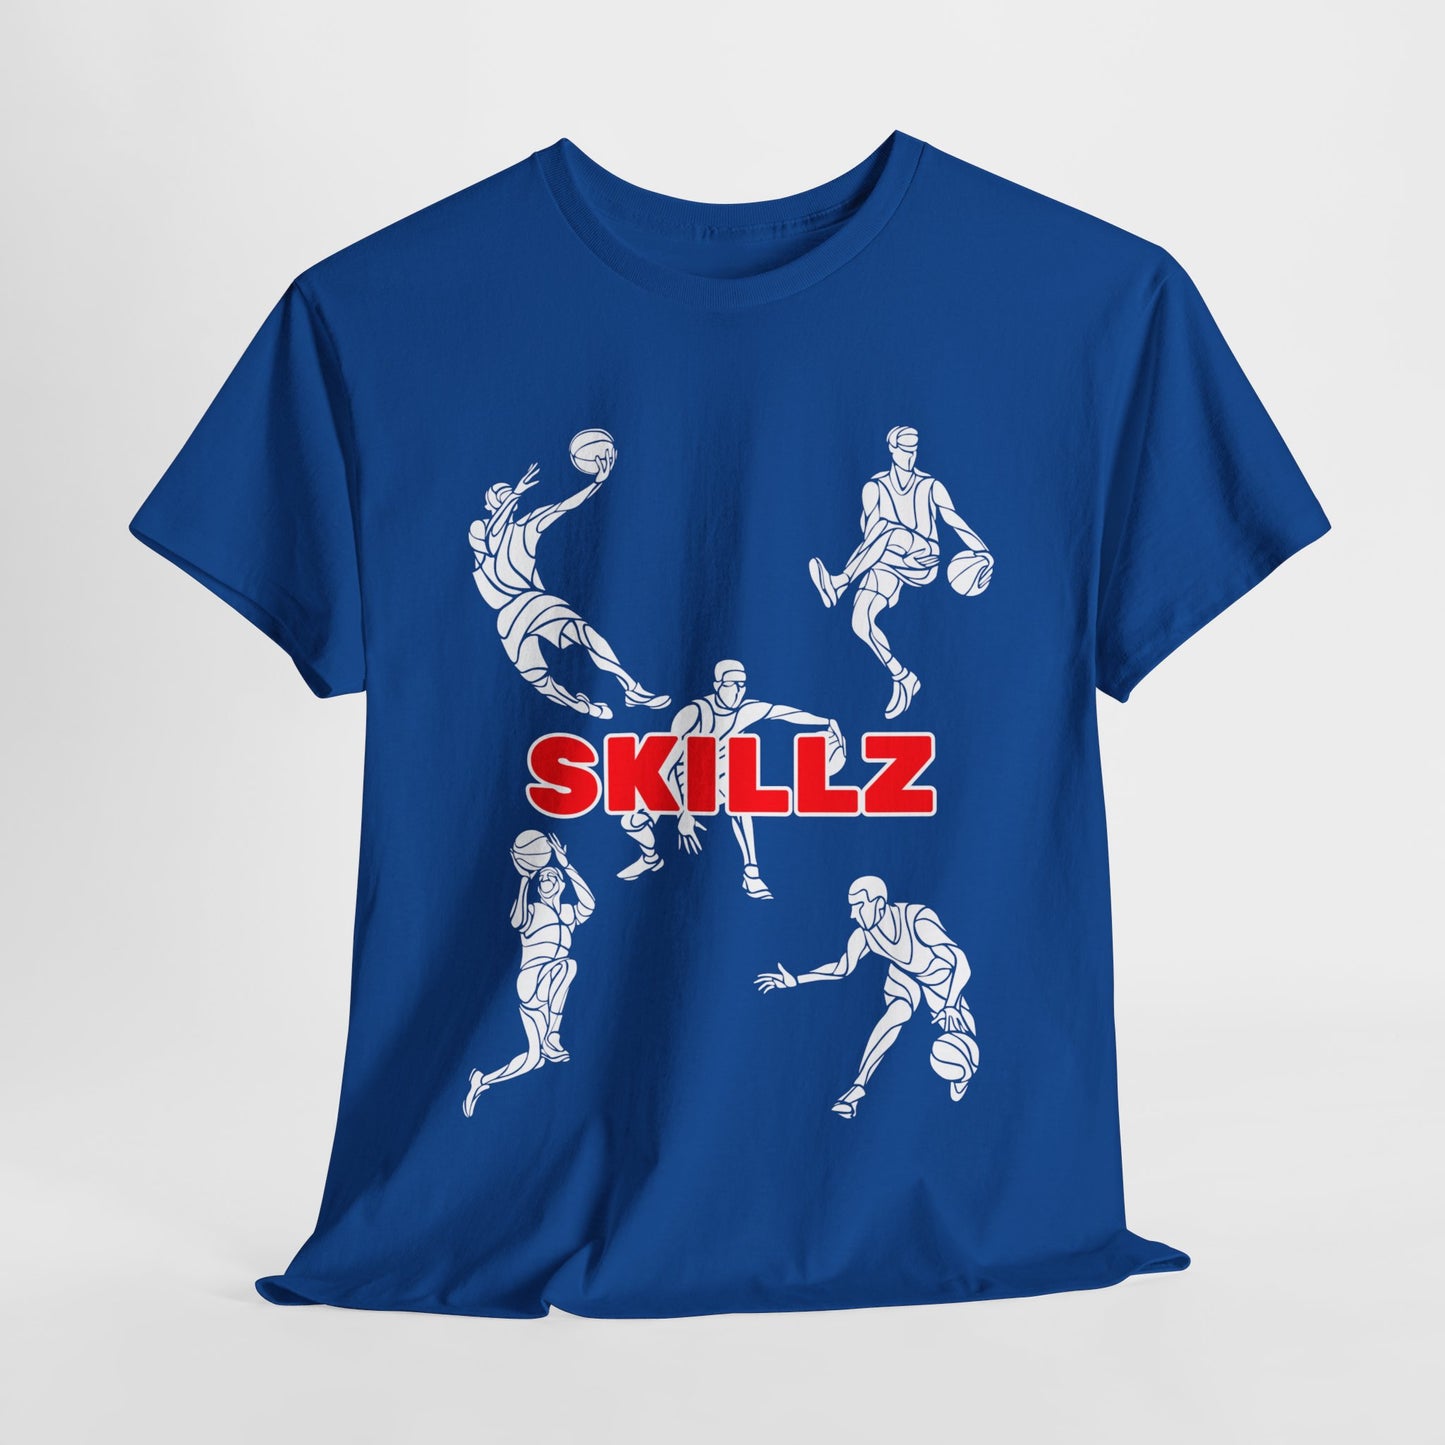 Unisex Heavy Cotton Graphic design (SKILLZ) T-shirt